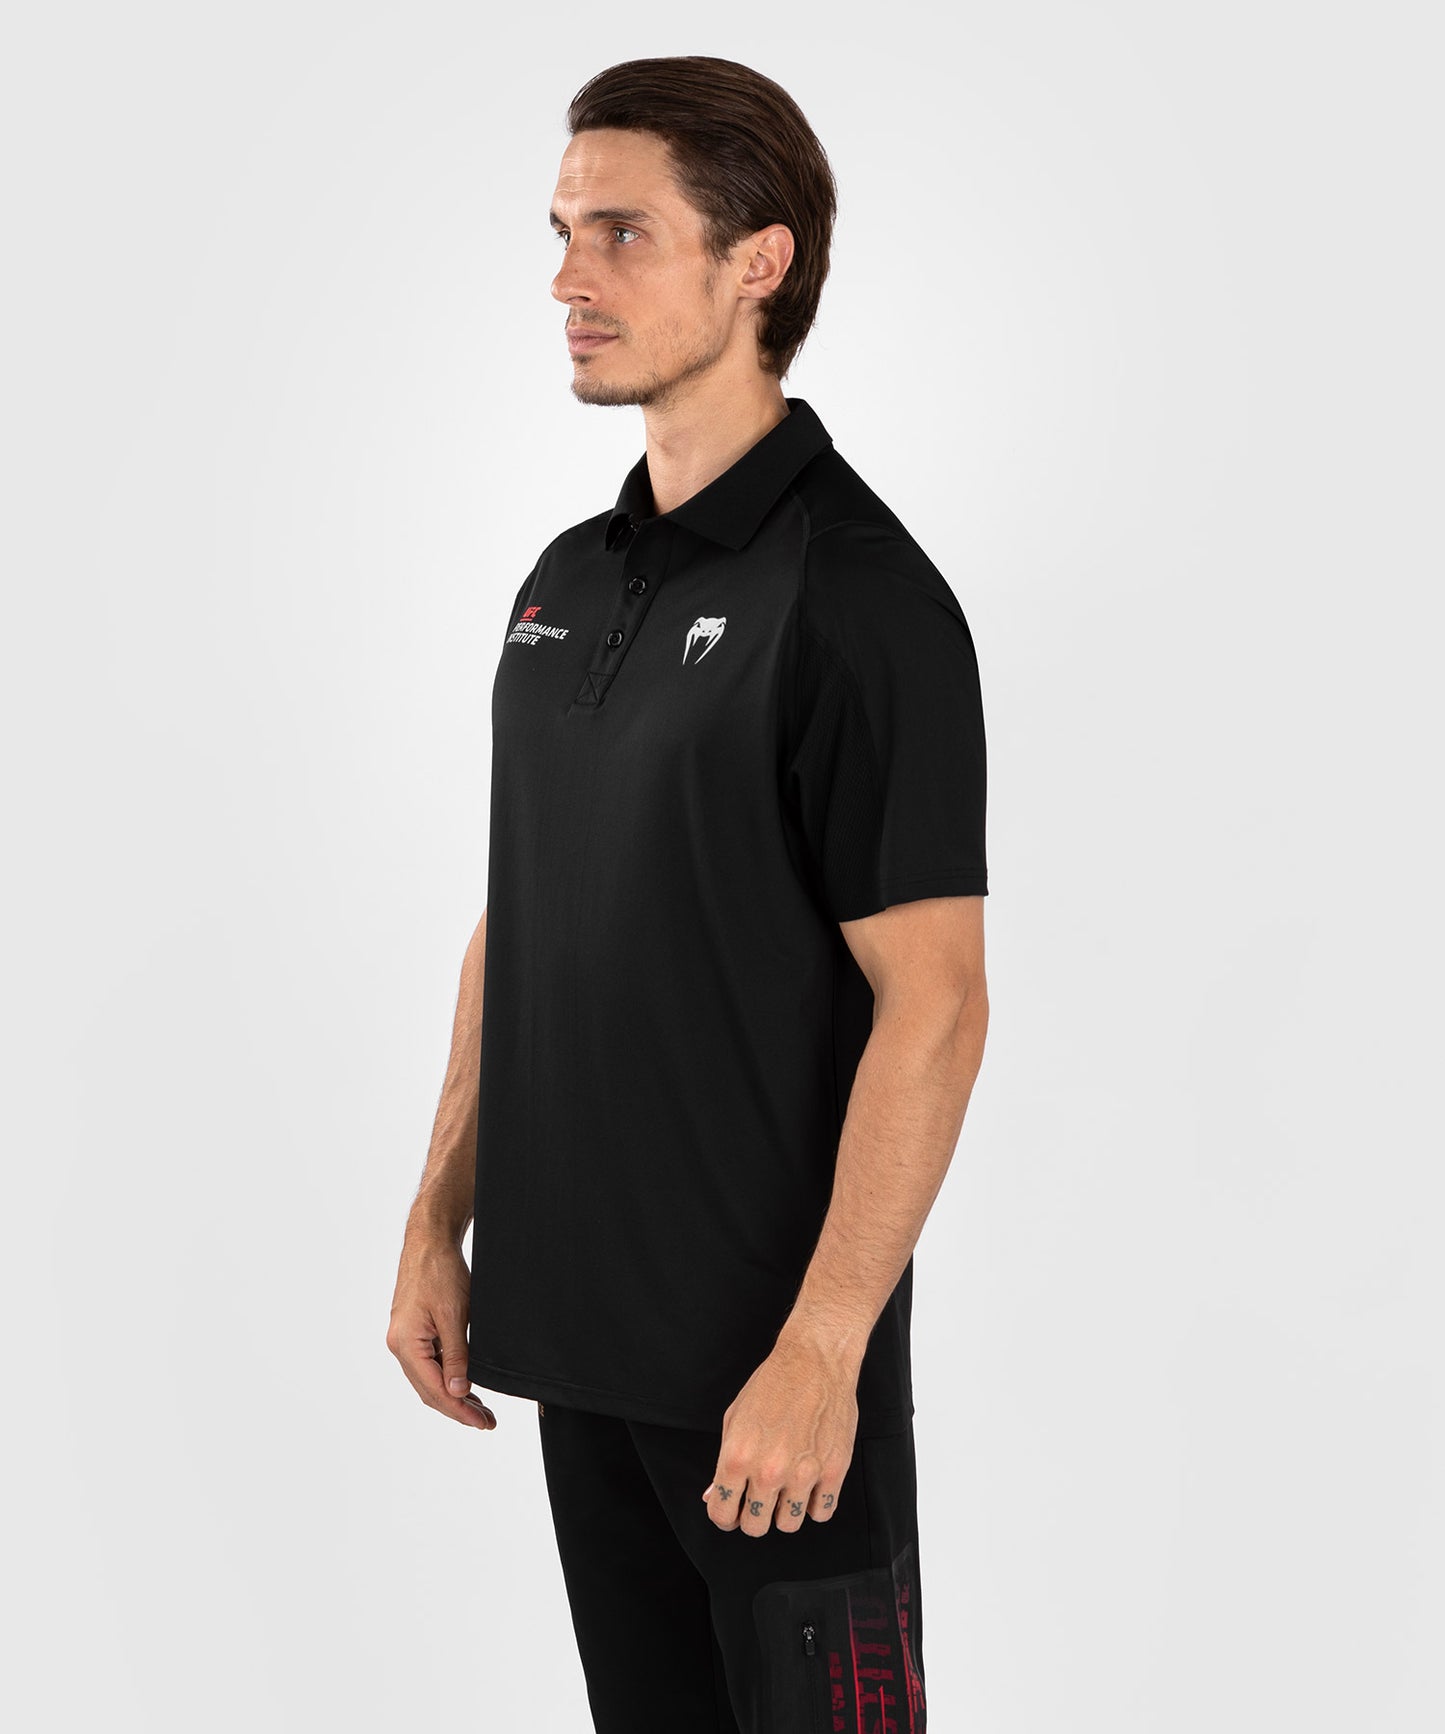 UFC Venum Performance Institute 2.0 Men’s Polo Shirt - Black/Red XXL